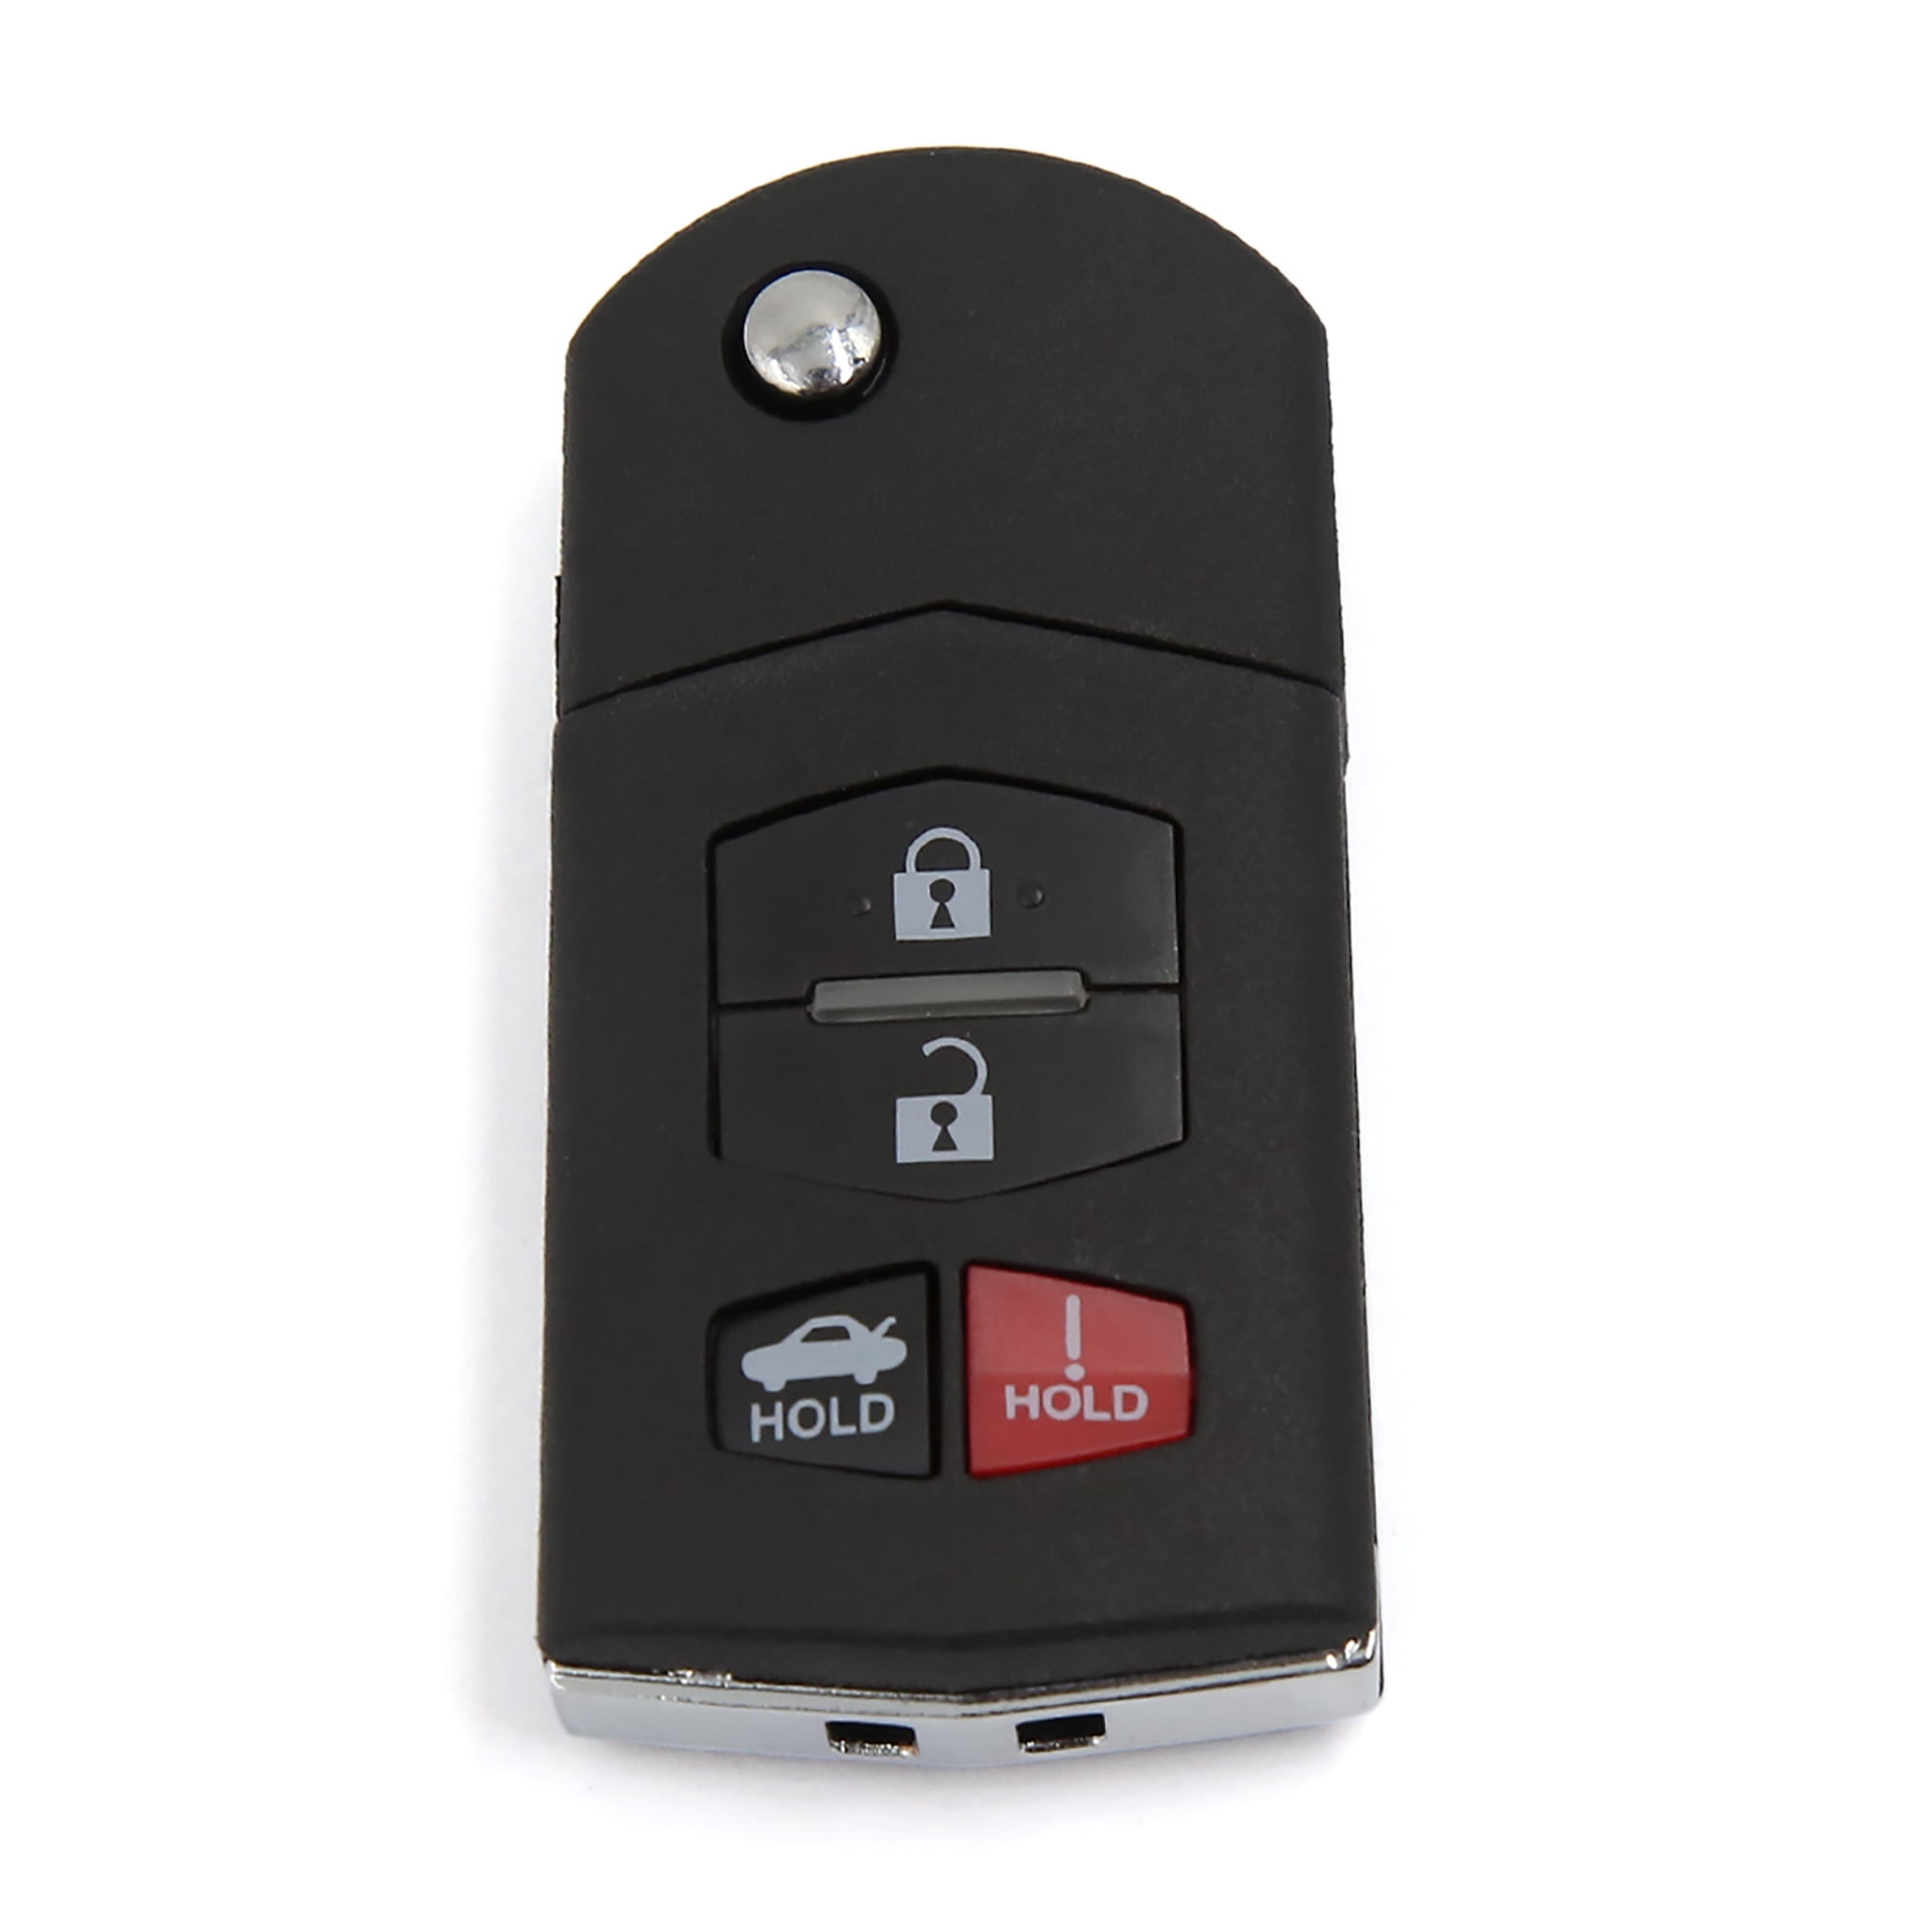 keyless remote  for Ford control keyfob car clicker new red 4 btn case shell pad 